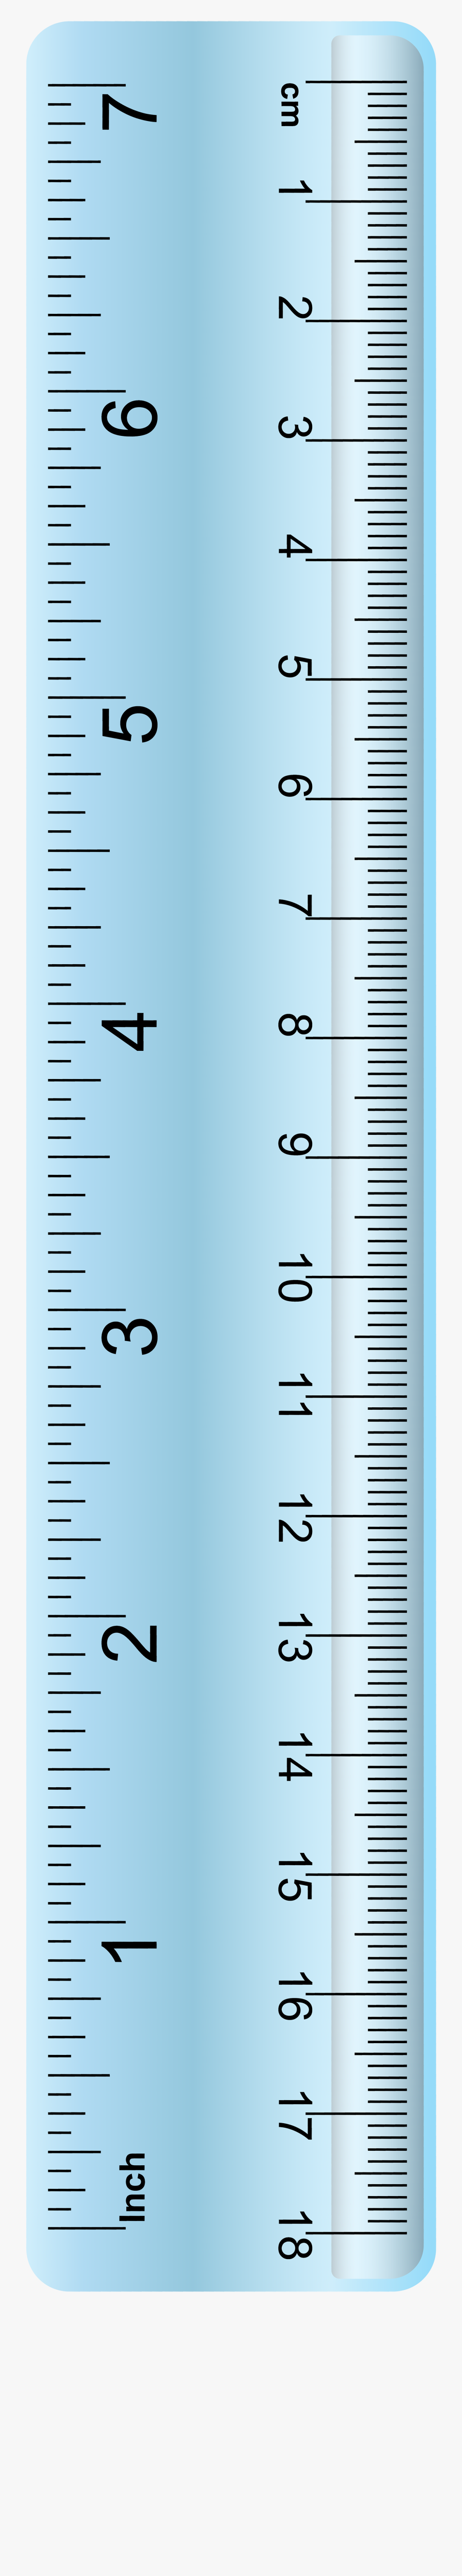 Ruler Clipart Full Size - Ruler, Transparent Clipart